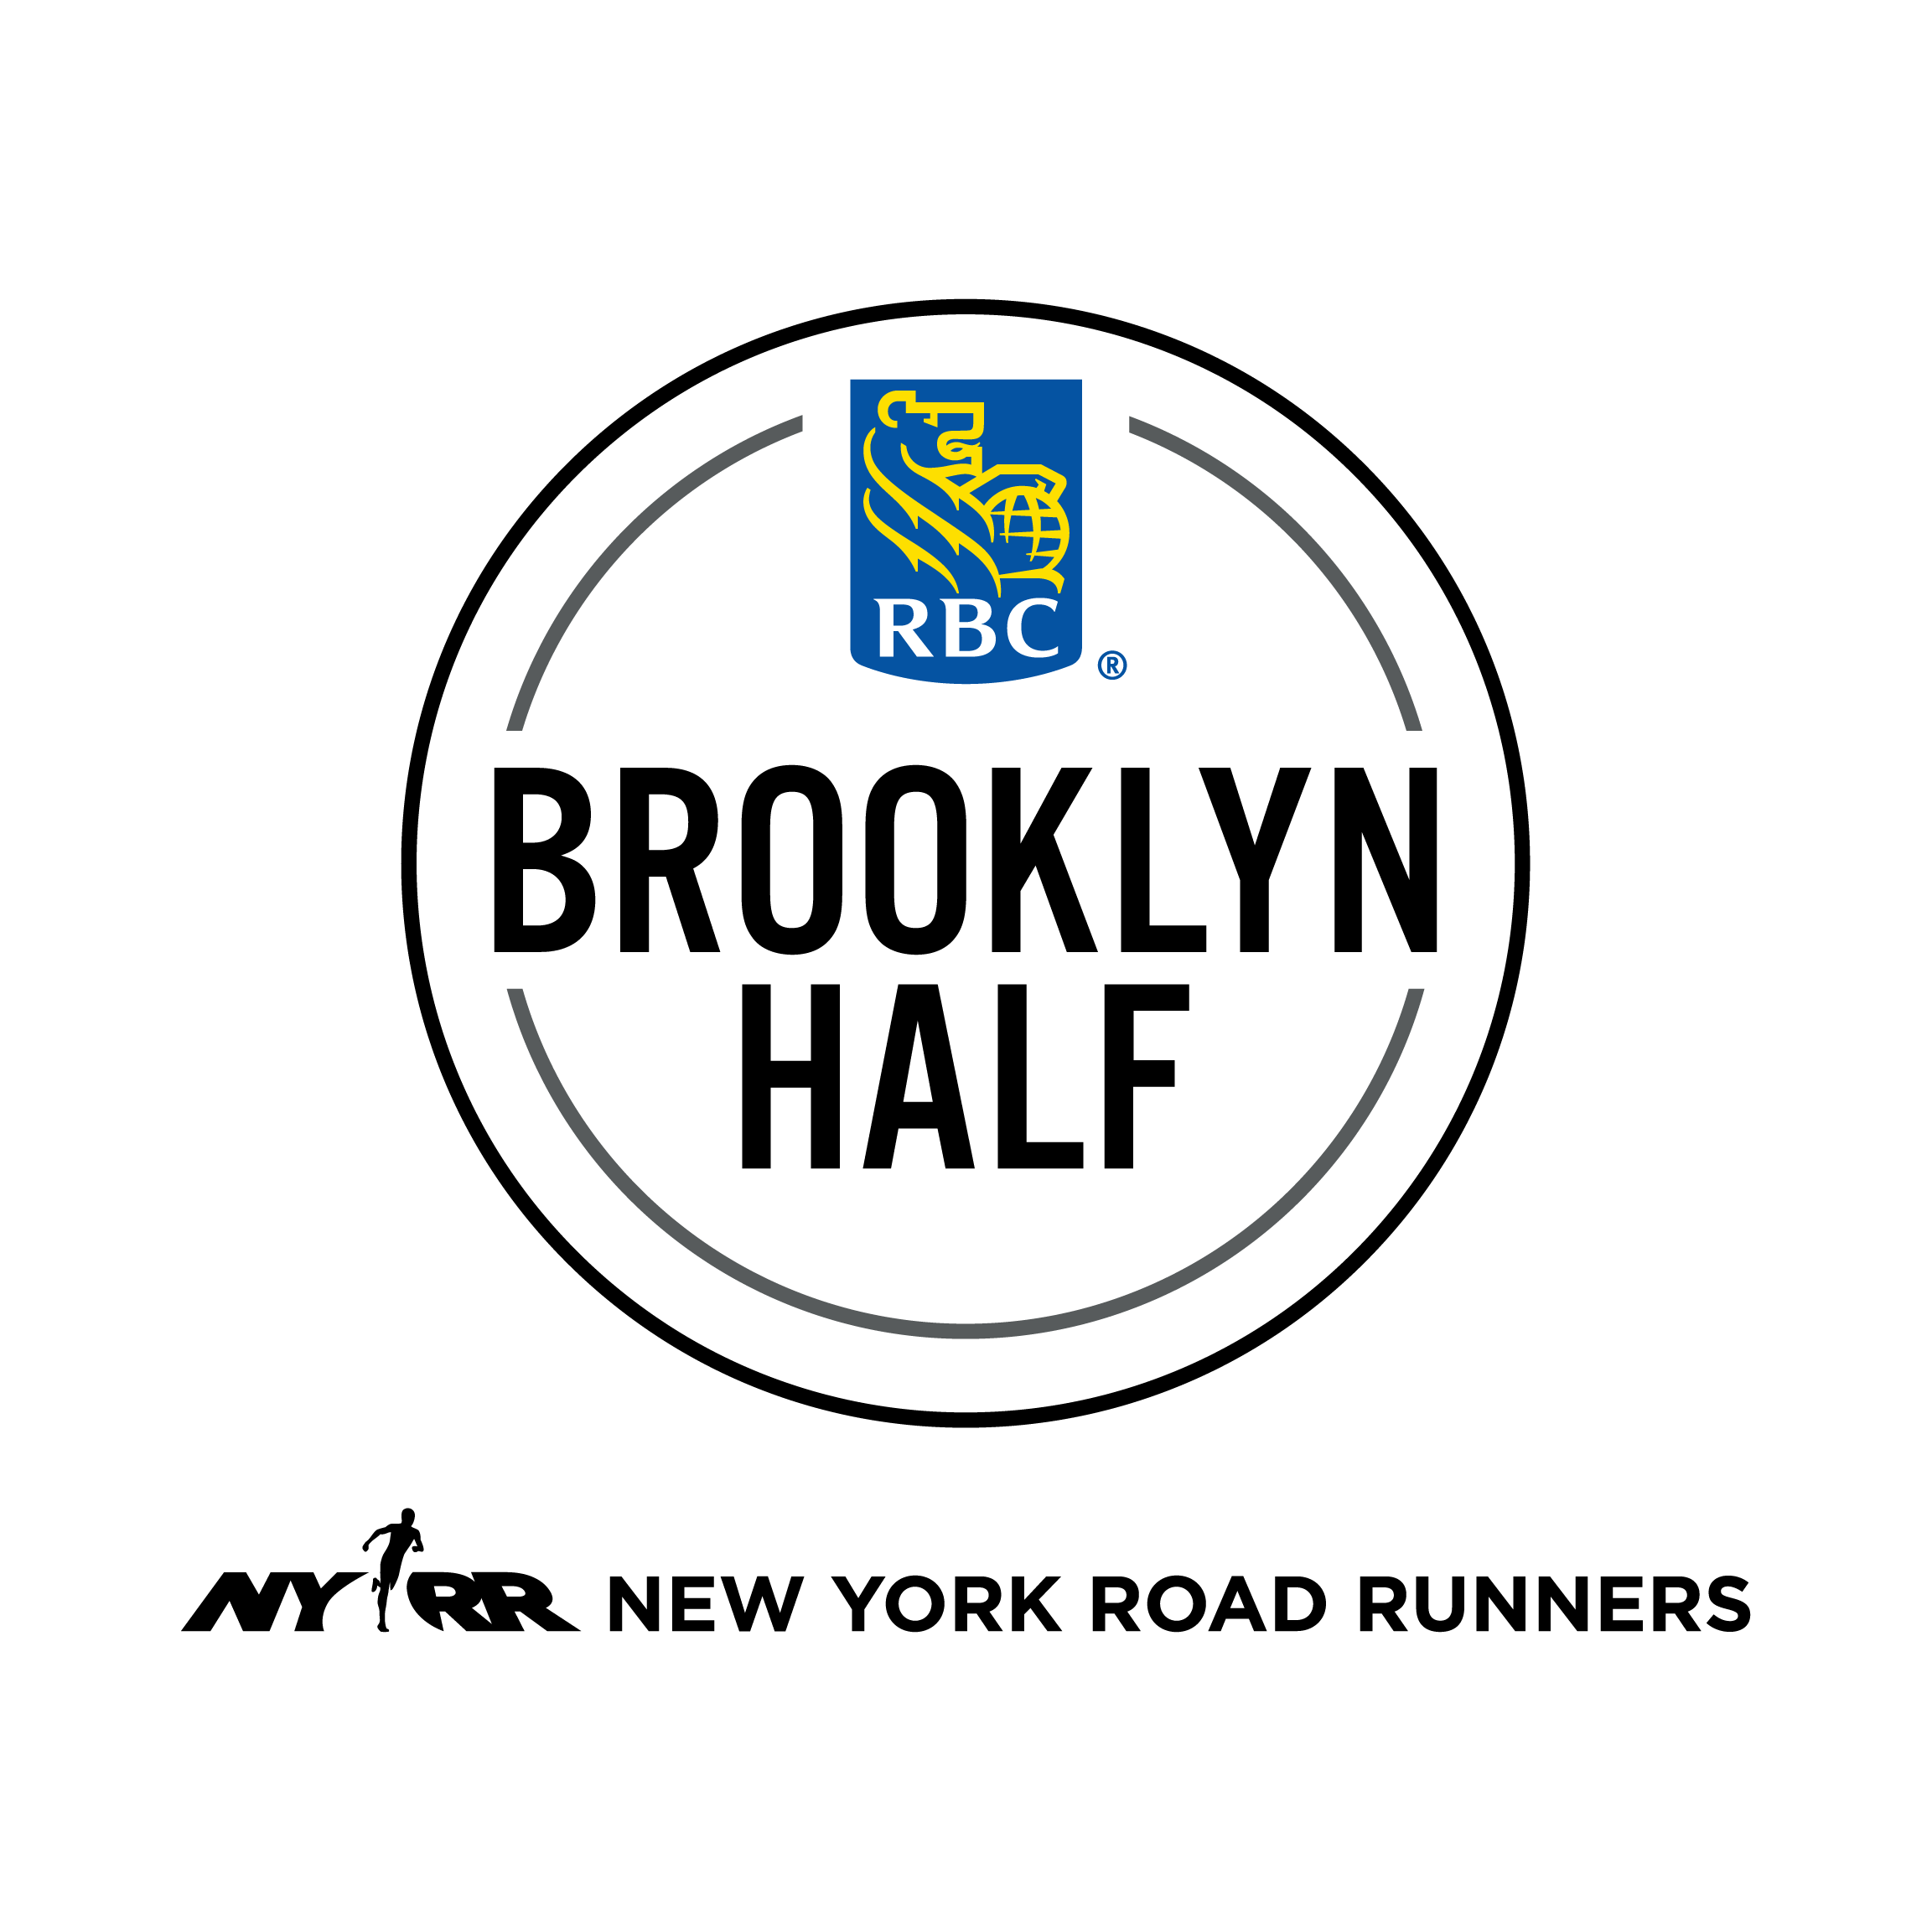 Brooklyn Half Marathon logo on RaceRaves